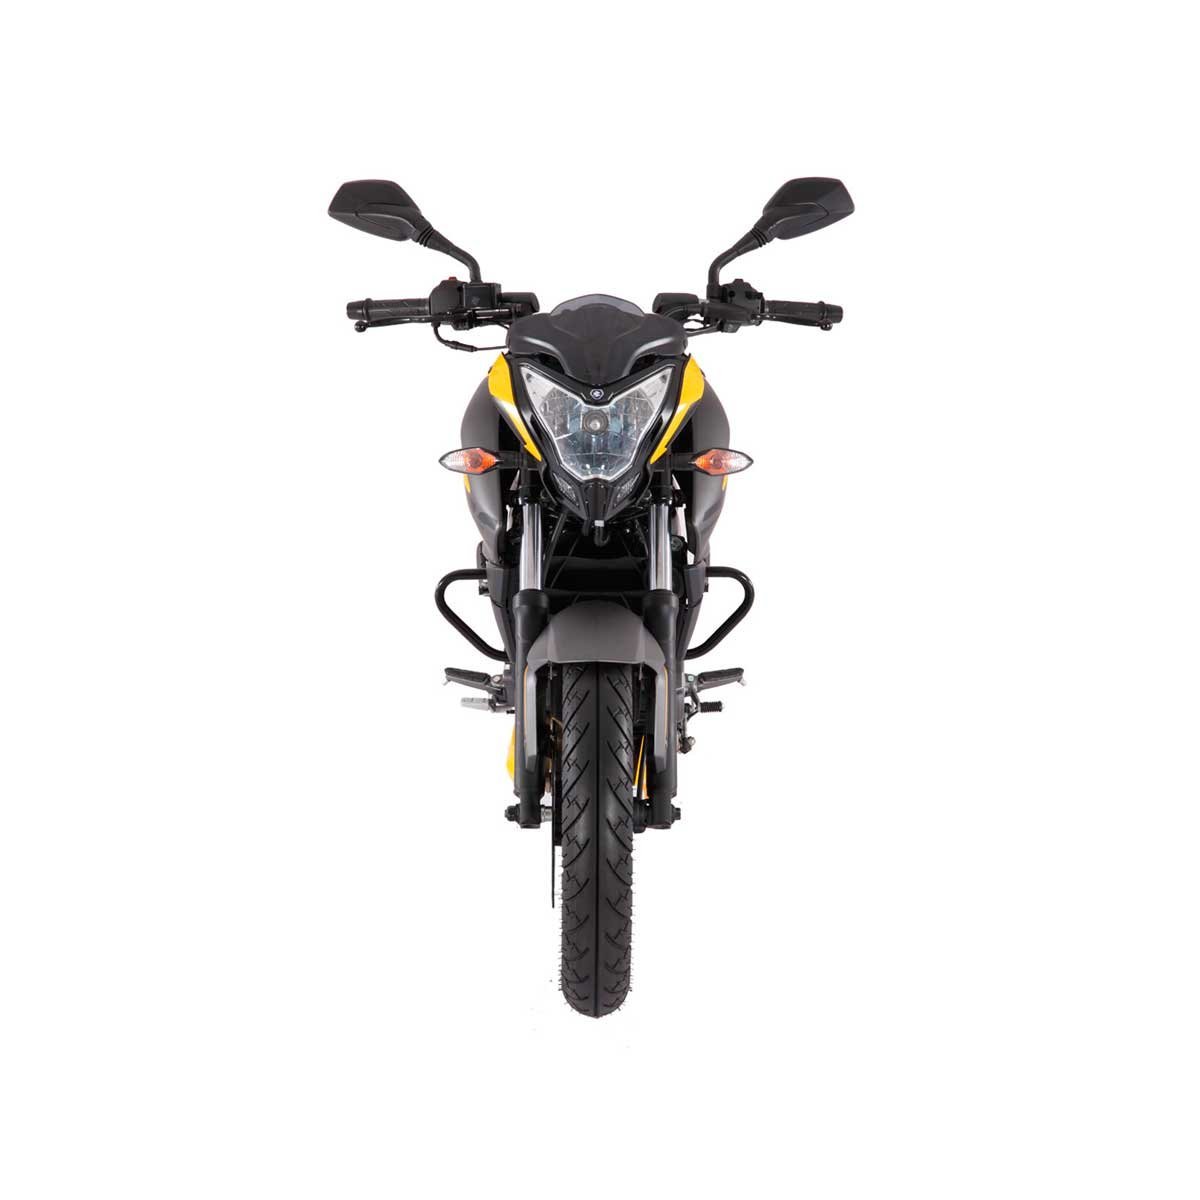 Motocicleta Pulsar Ns 200 Fi 2020 Amarillo Bajaj